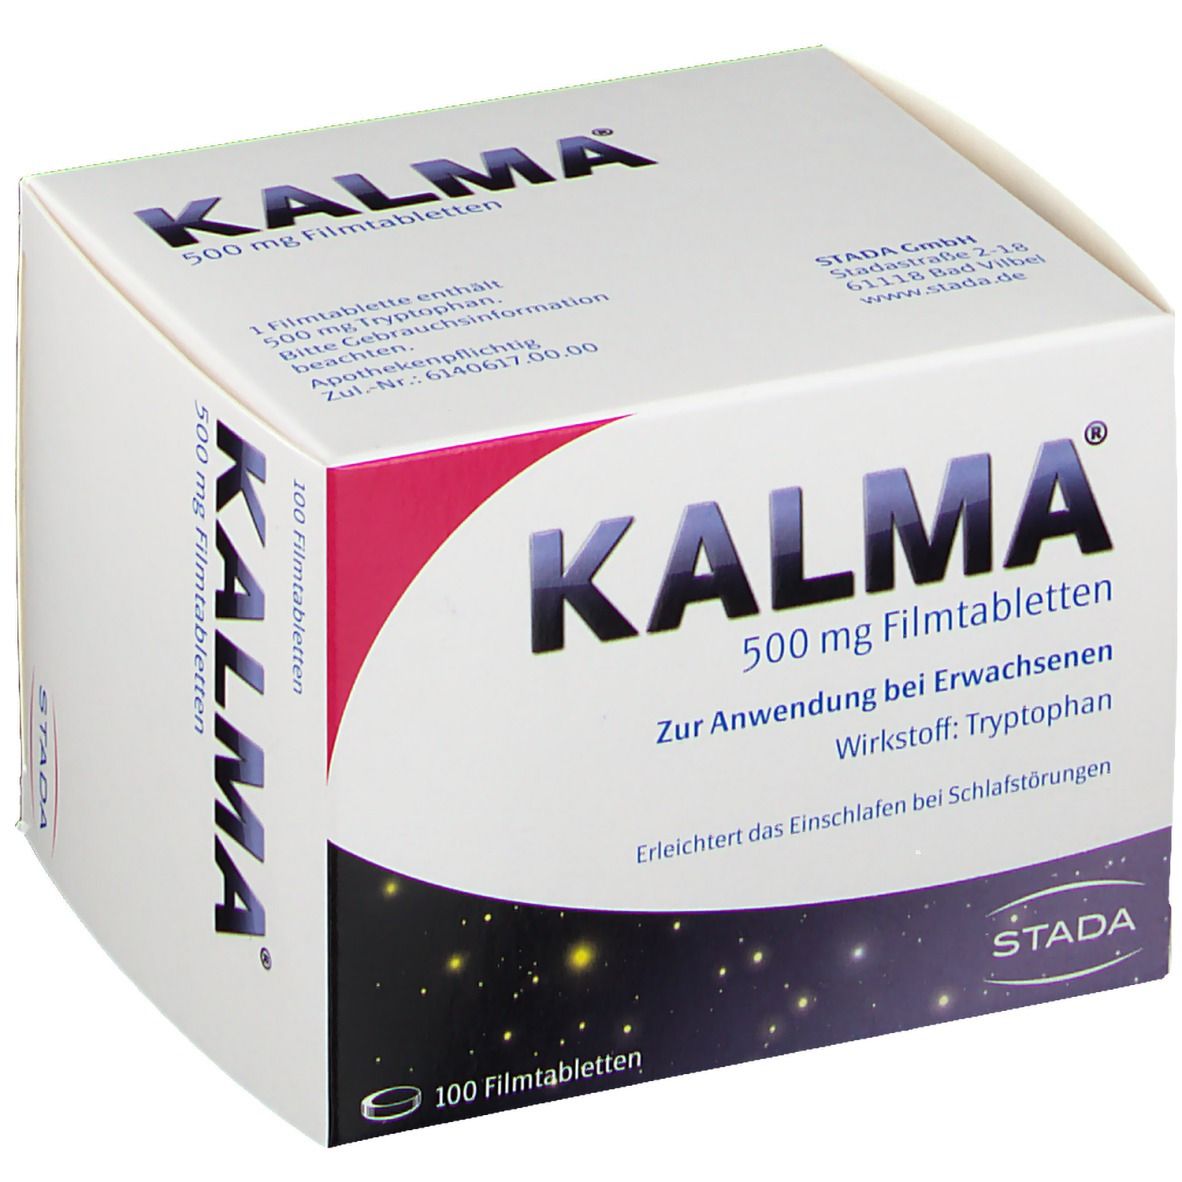 KALMA® - Einschlaftabletten